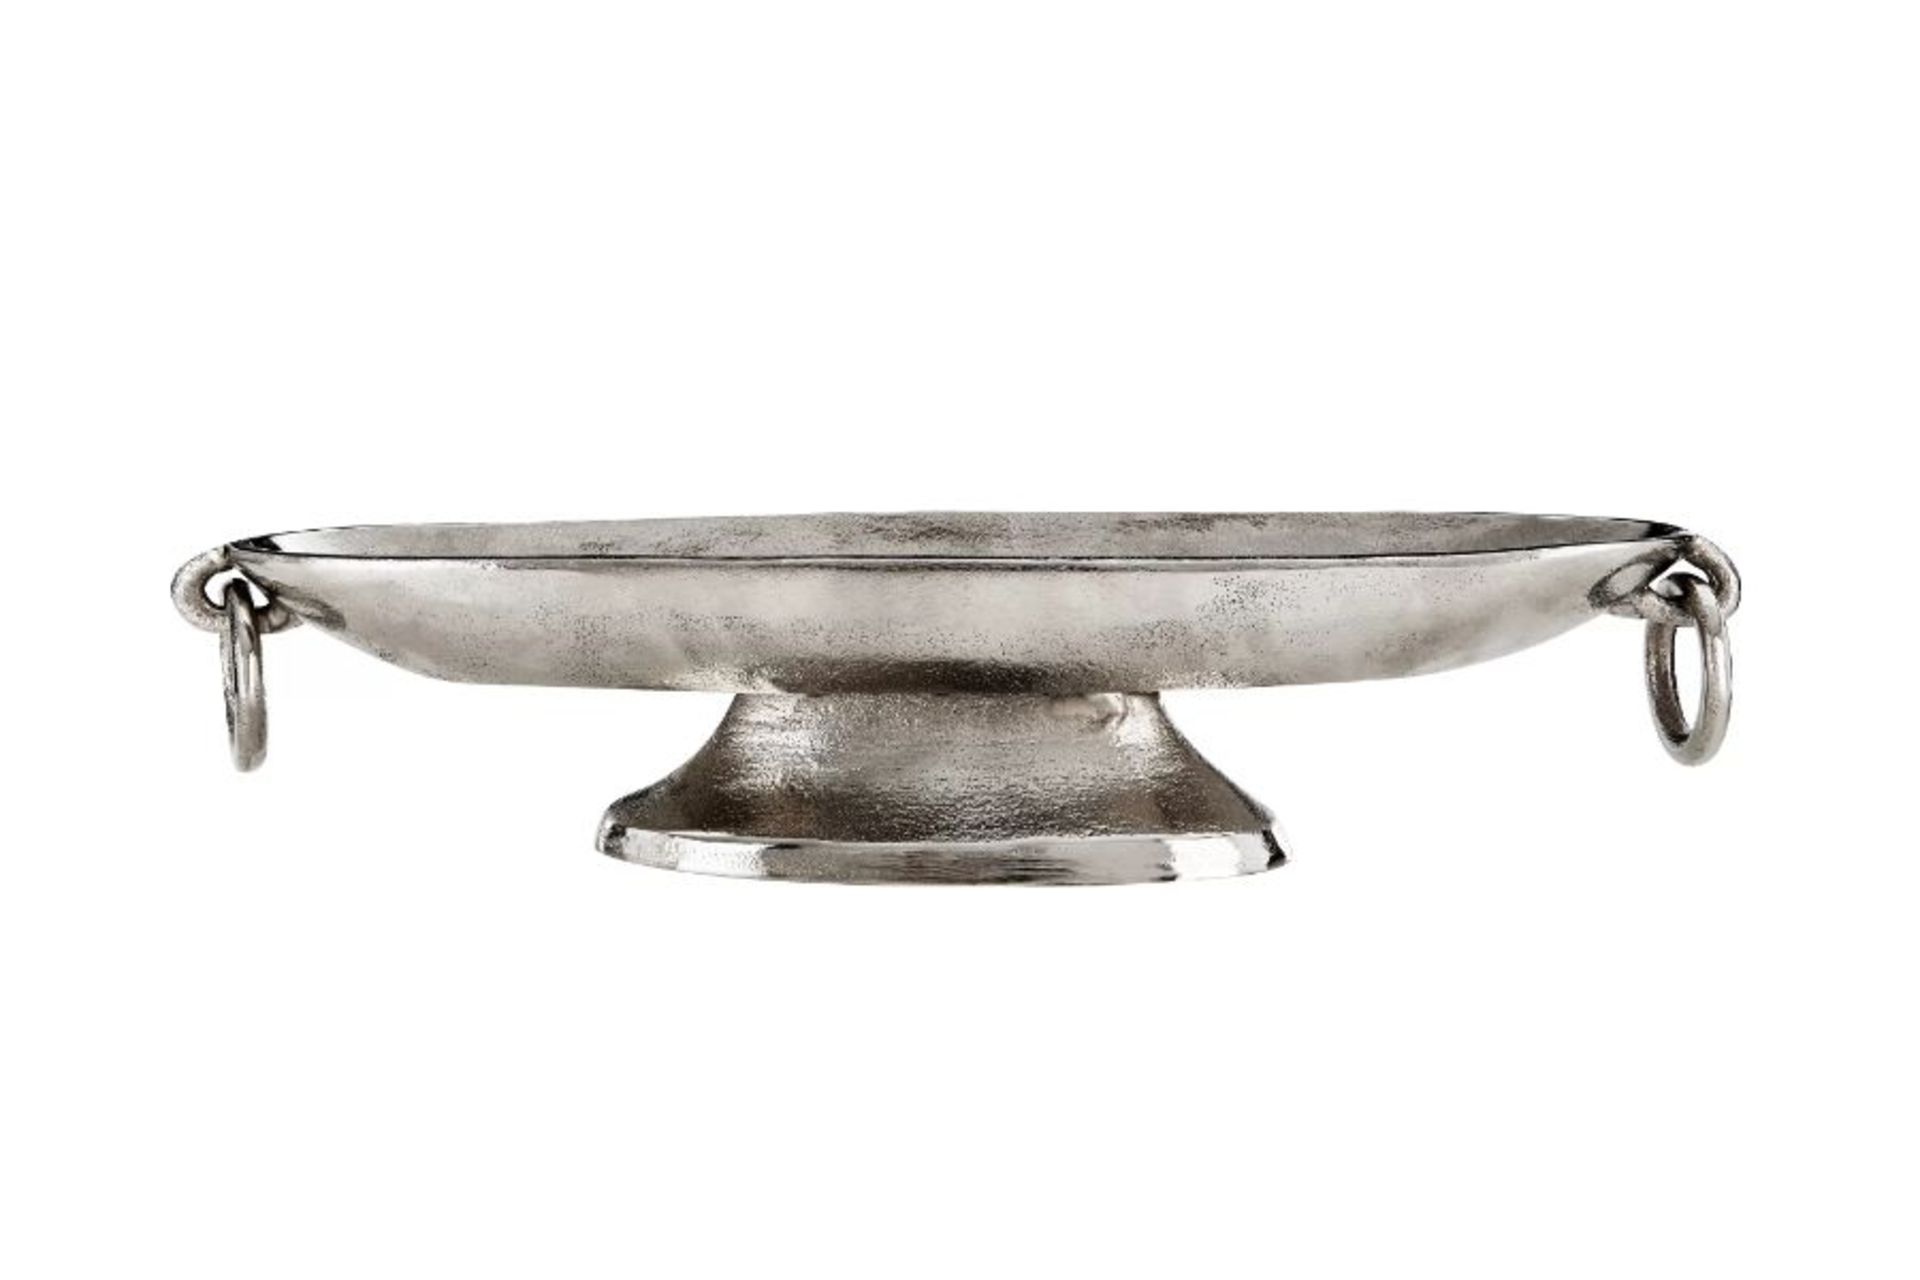 Mistana, Oussem Handmade Metal Decorative Plate (SILVER FINISH) - RRP £55.99 (CCOO6532 - 28422/38)